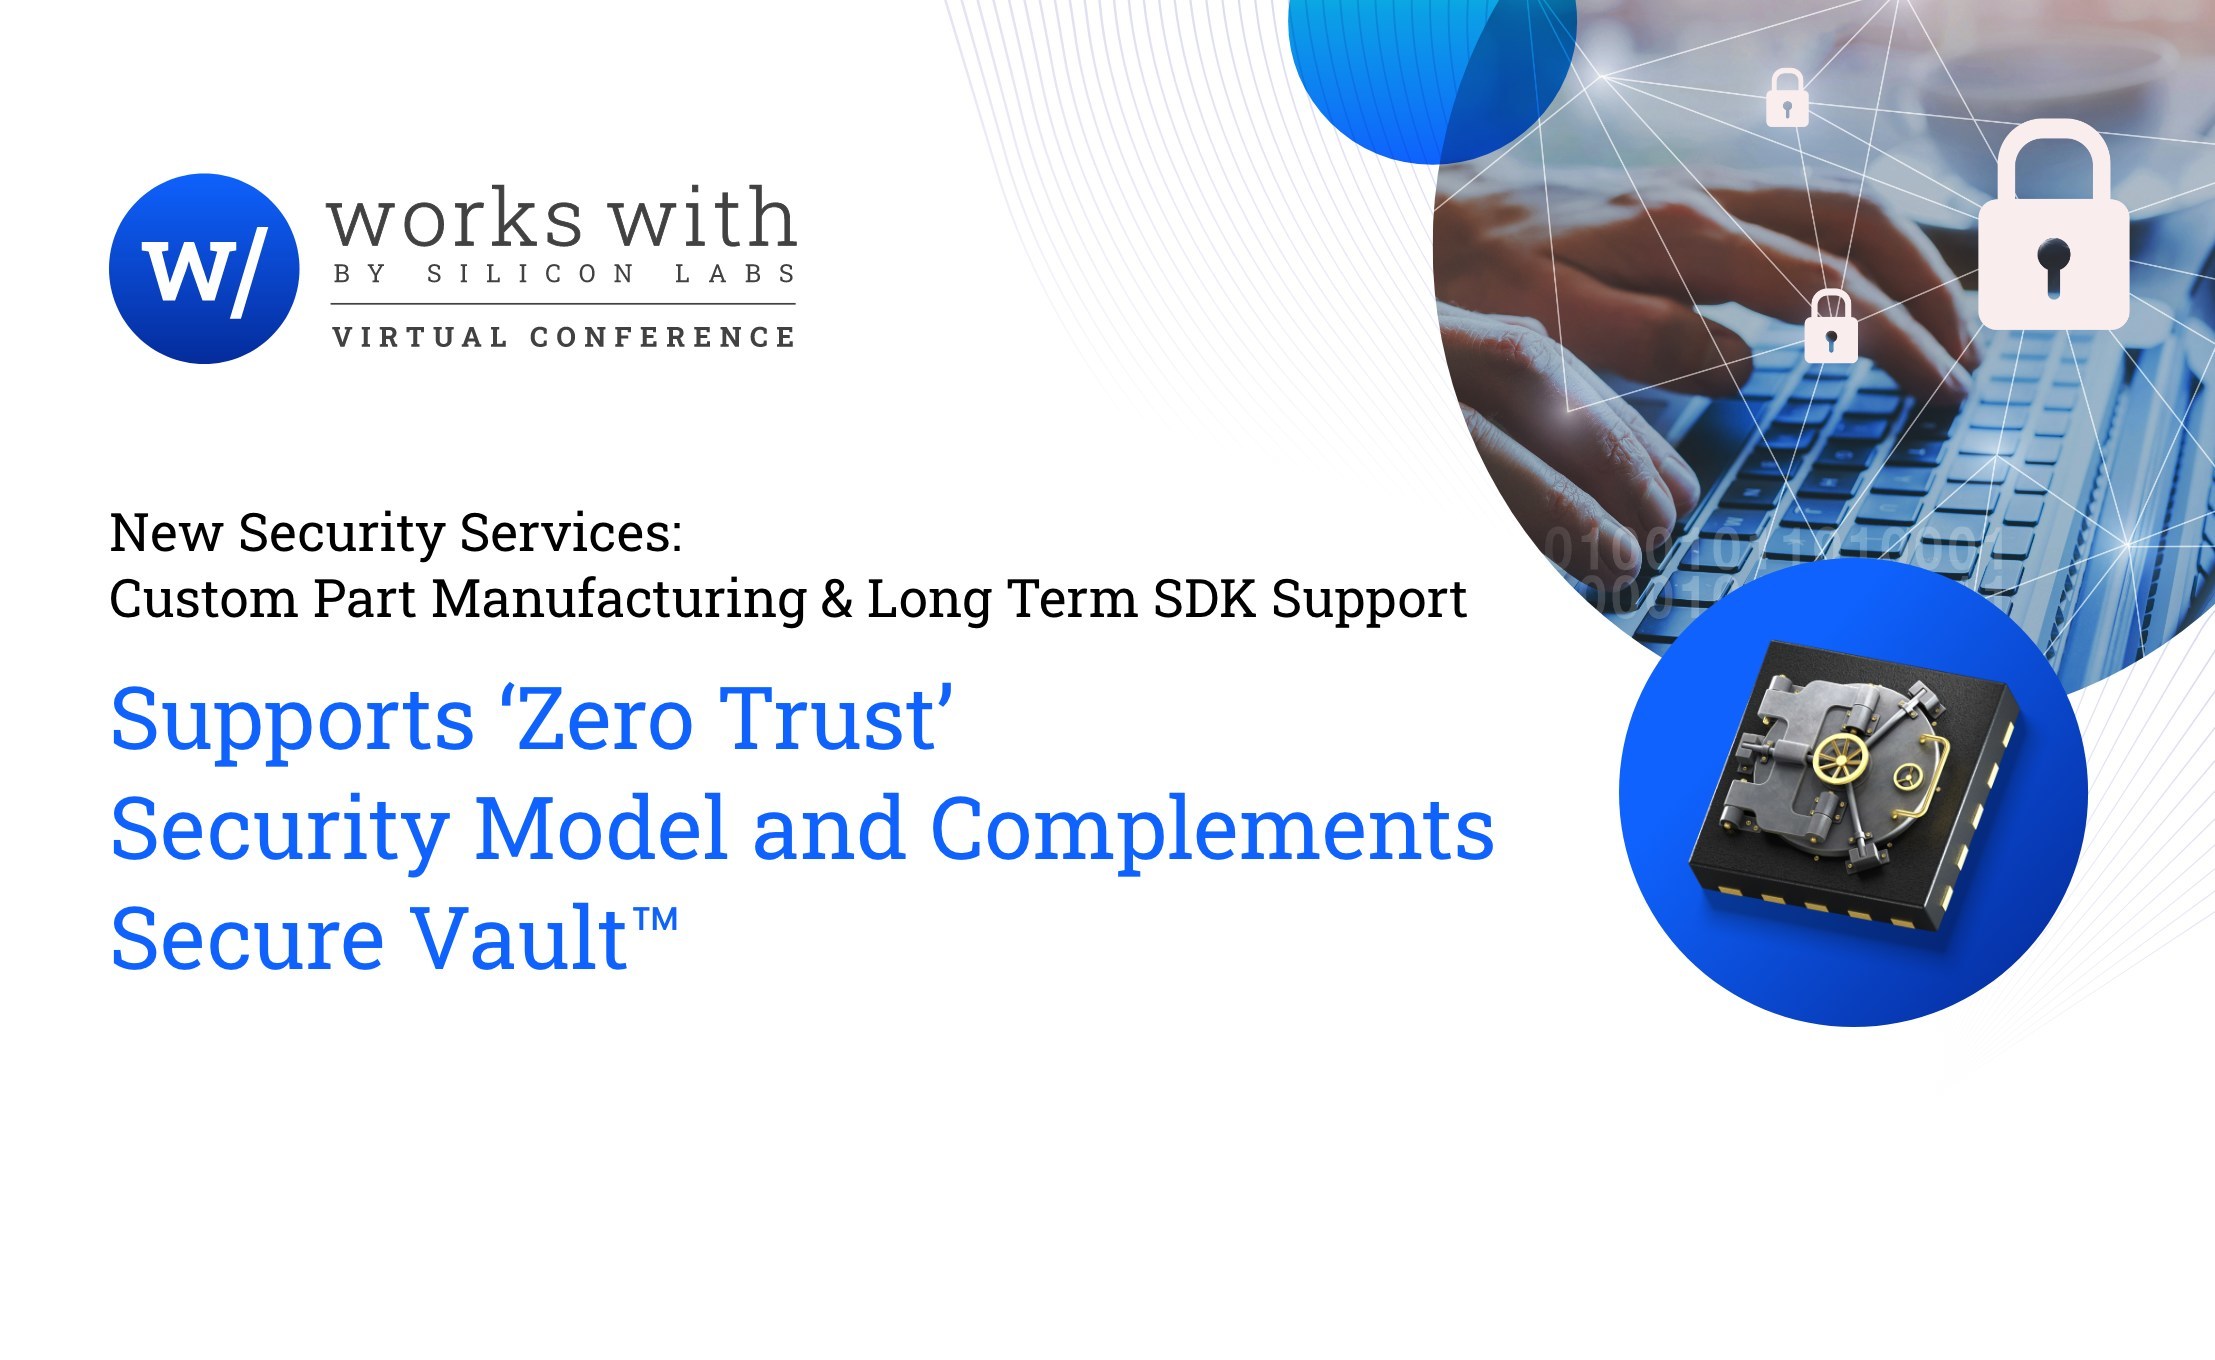 Silicon Labs 推出安全服务订制解决方案以支持物联网的“Zero Trust”安全模式